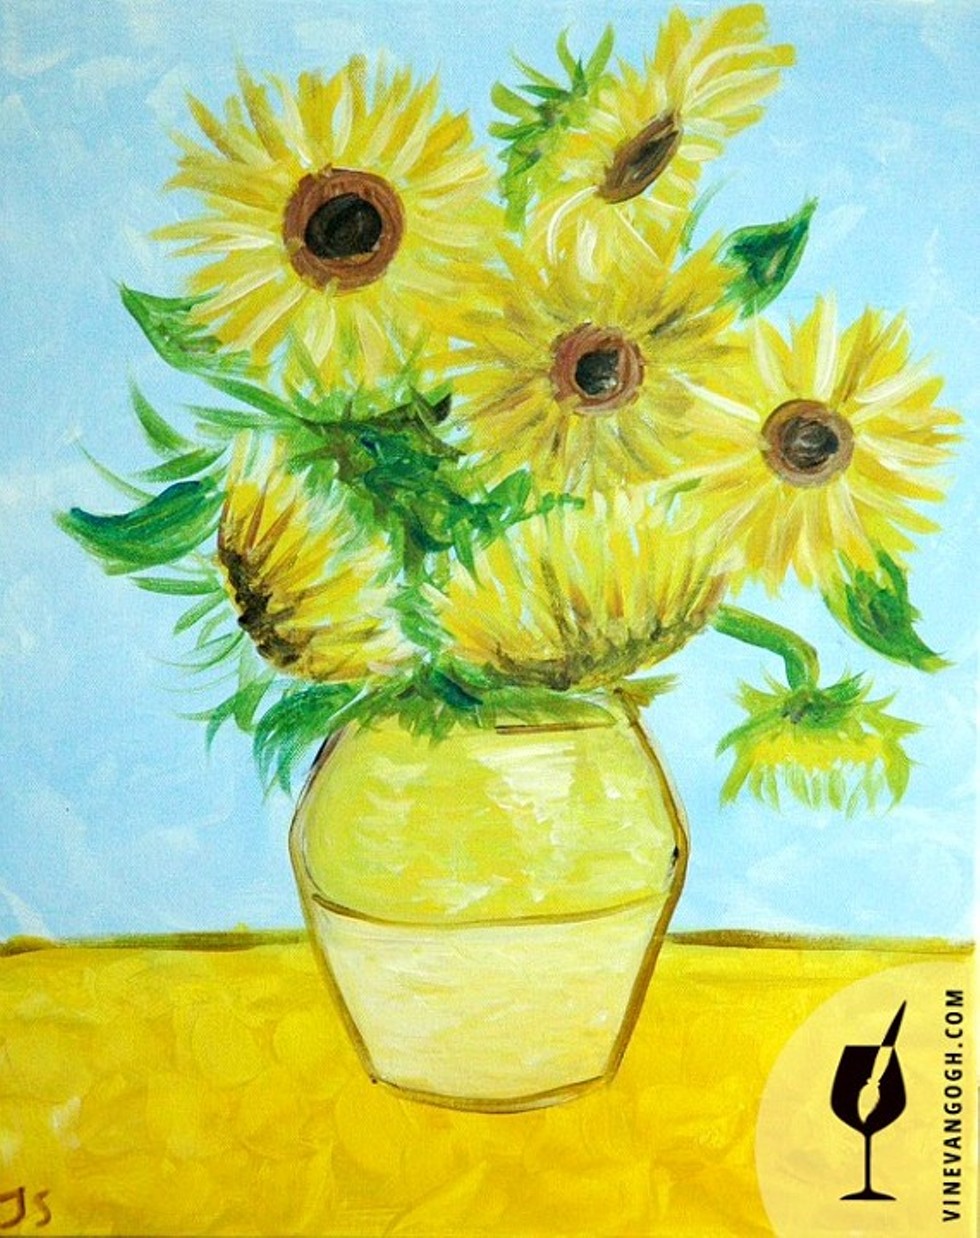 8825cb1d_van_gogh_s_sunflowers-_easy-_jamie_wm.jpg